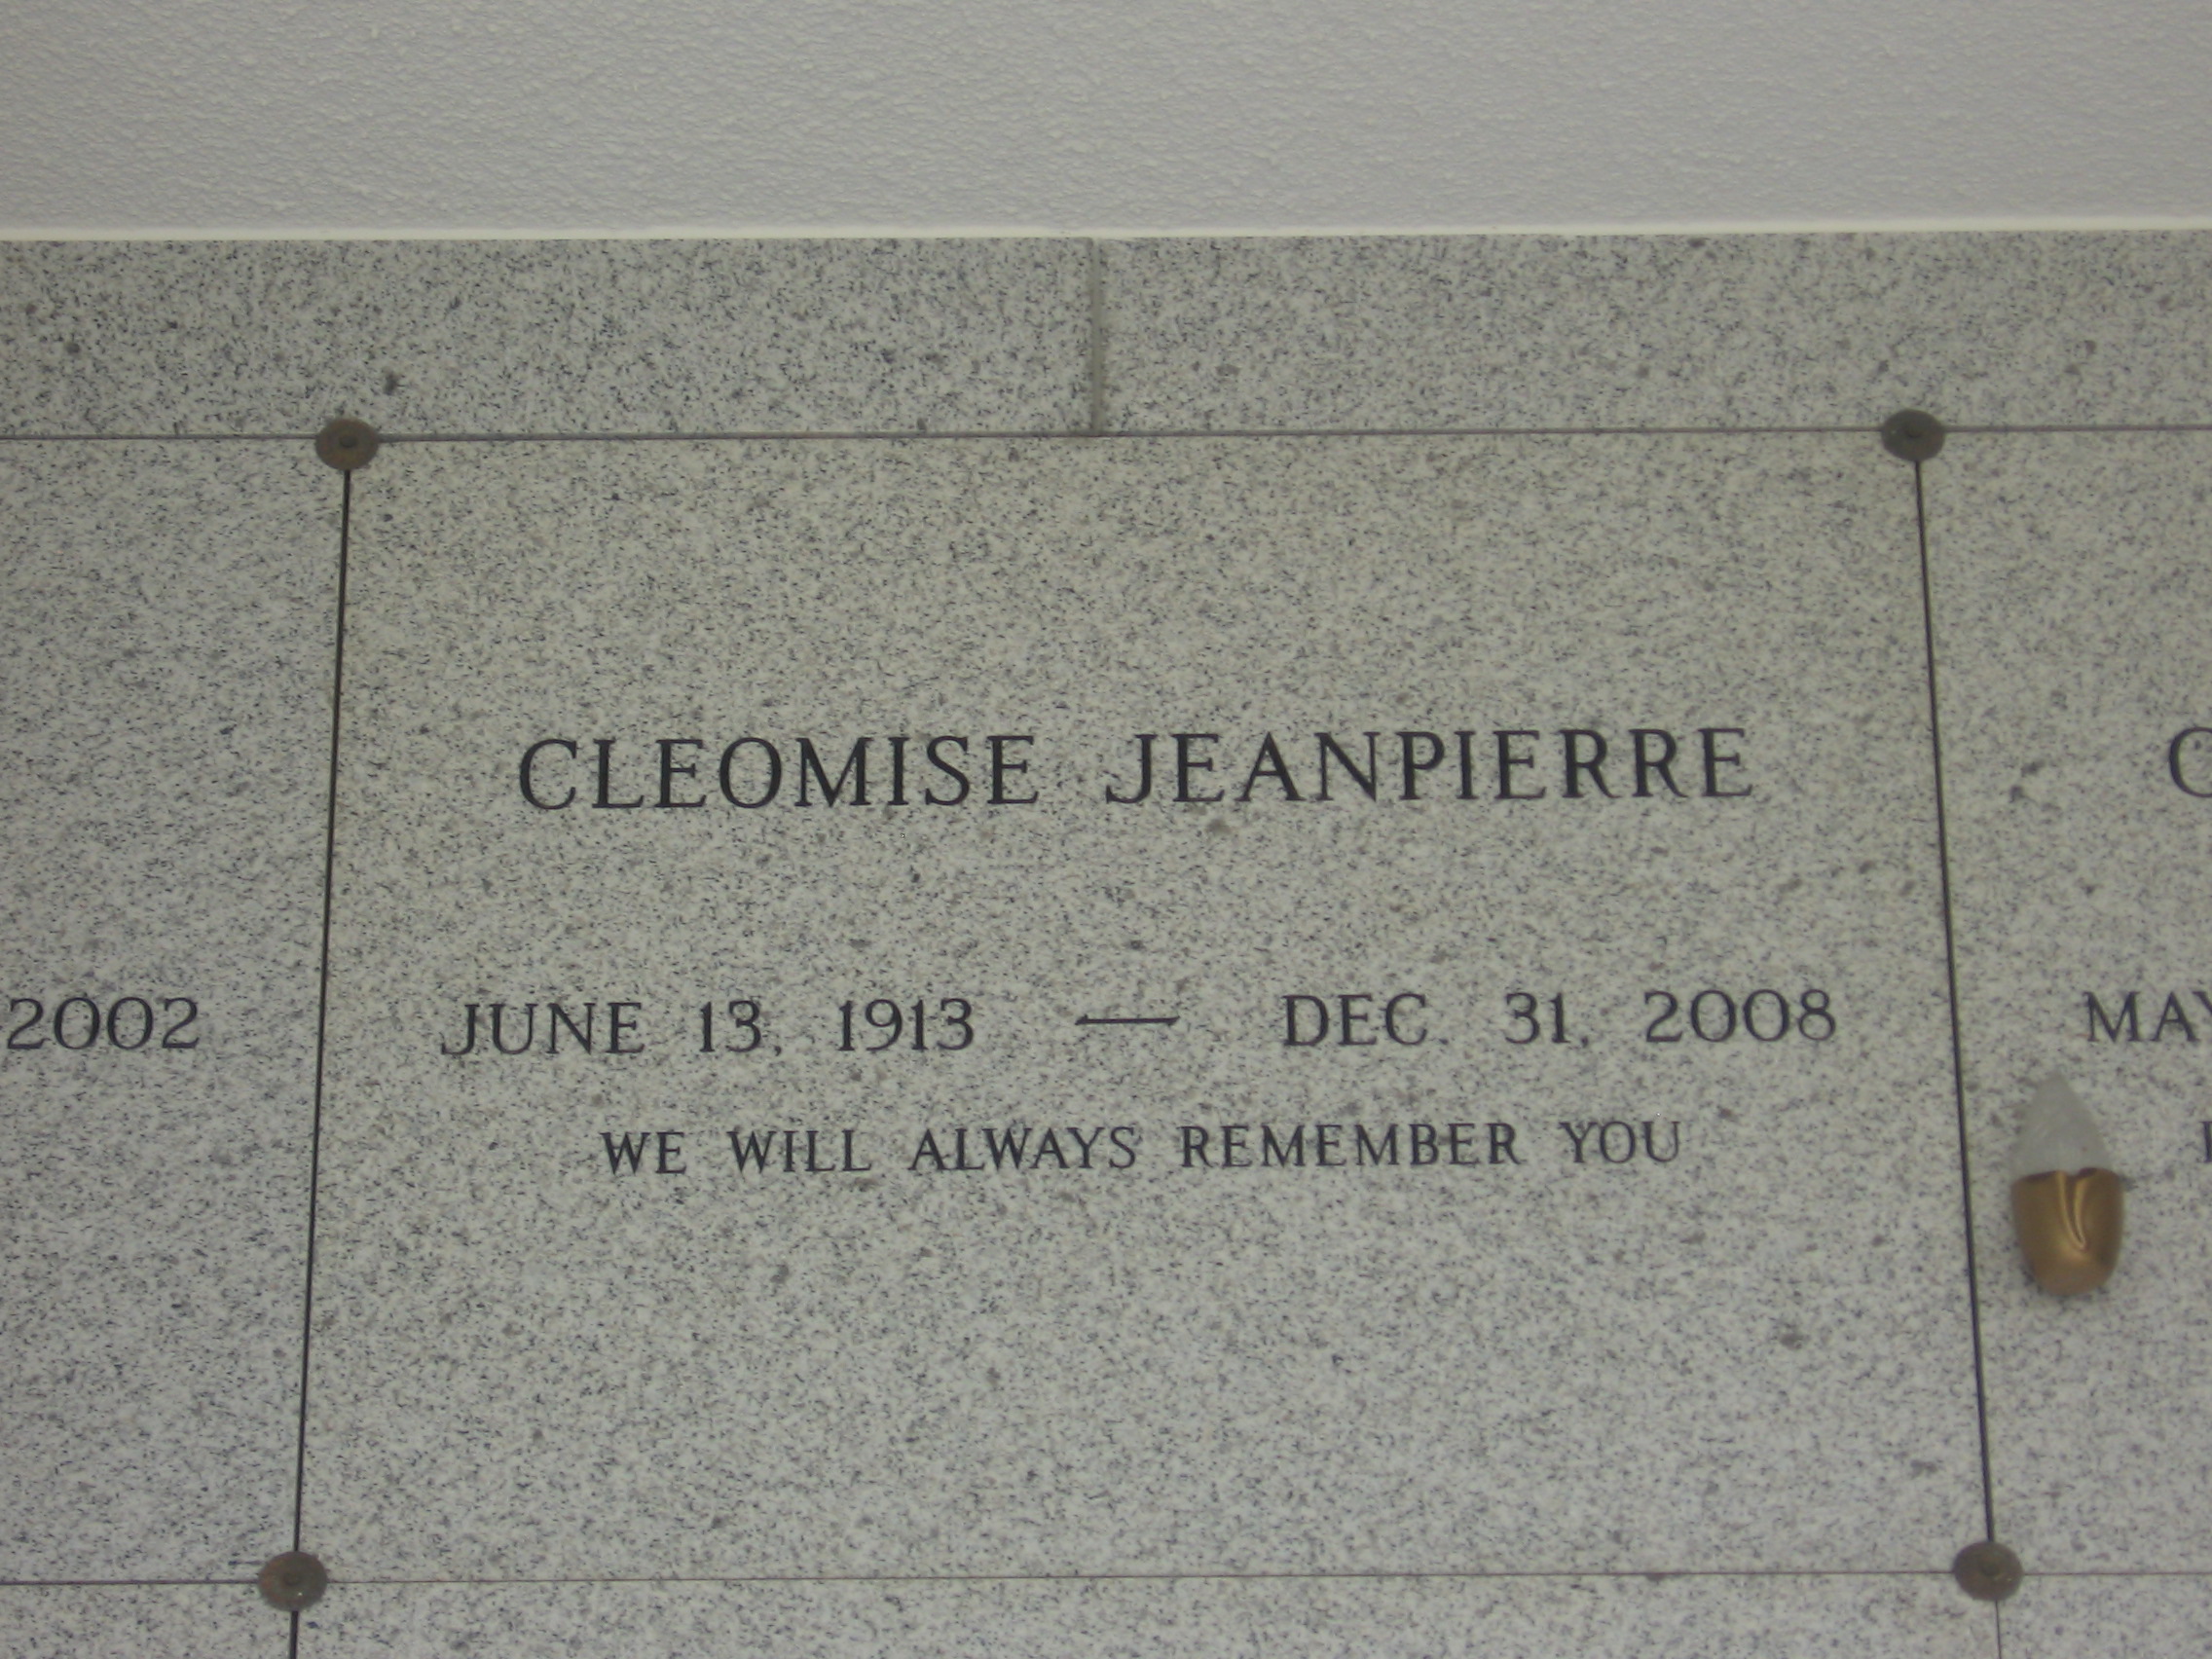 Cleomise Jeanpierre